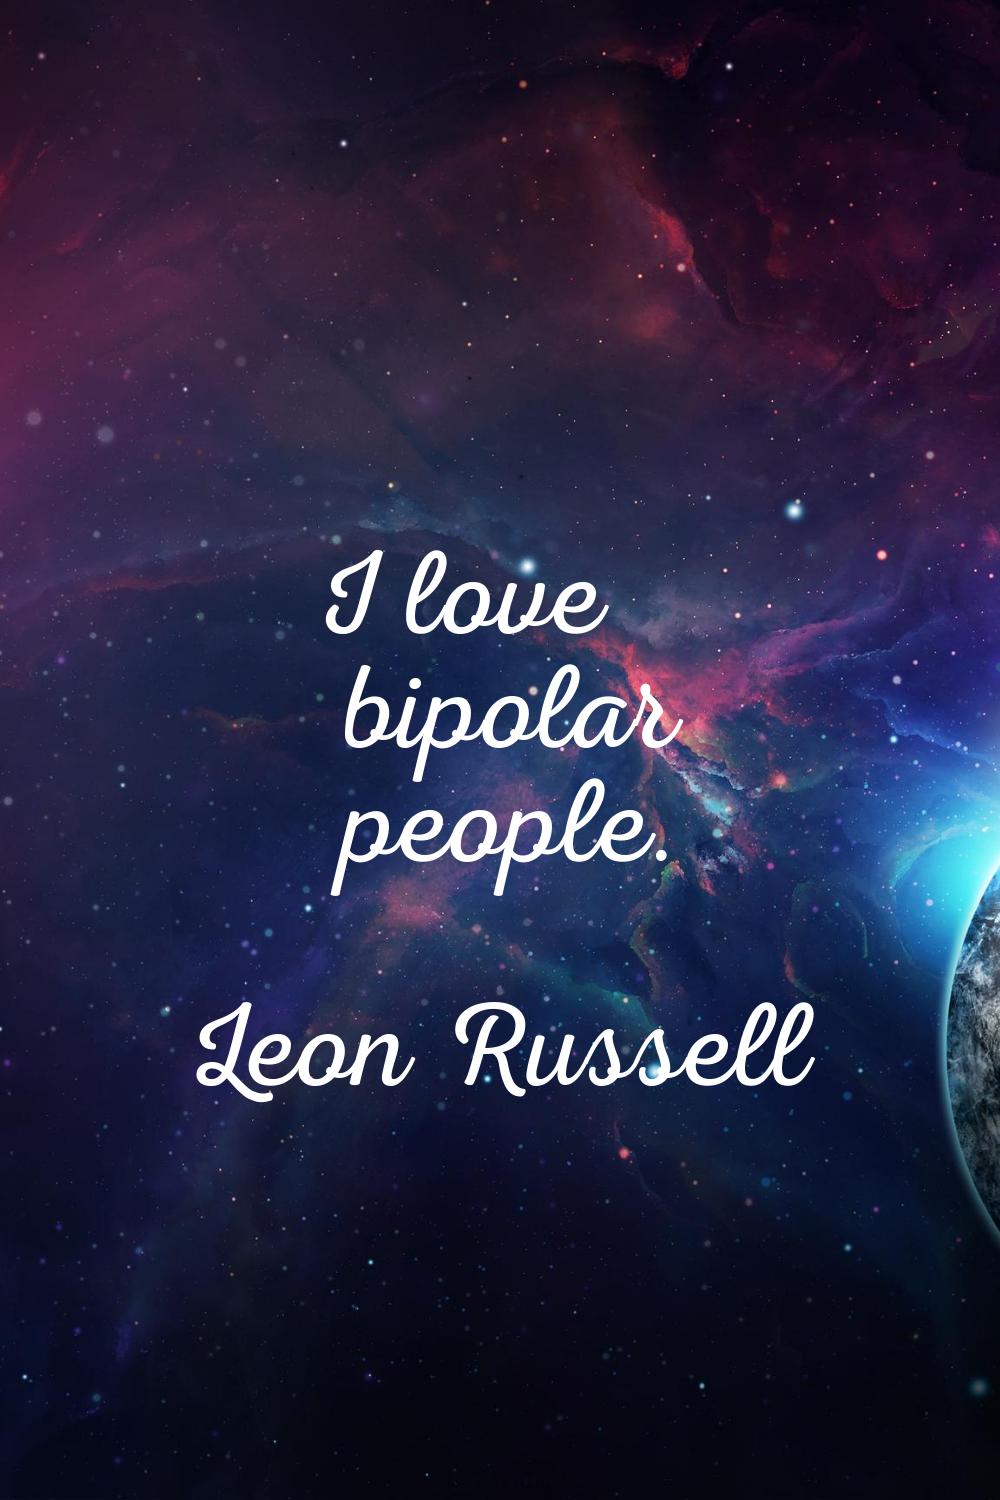 I love bipolar people.